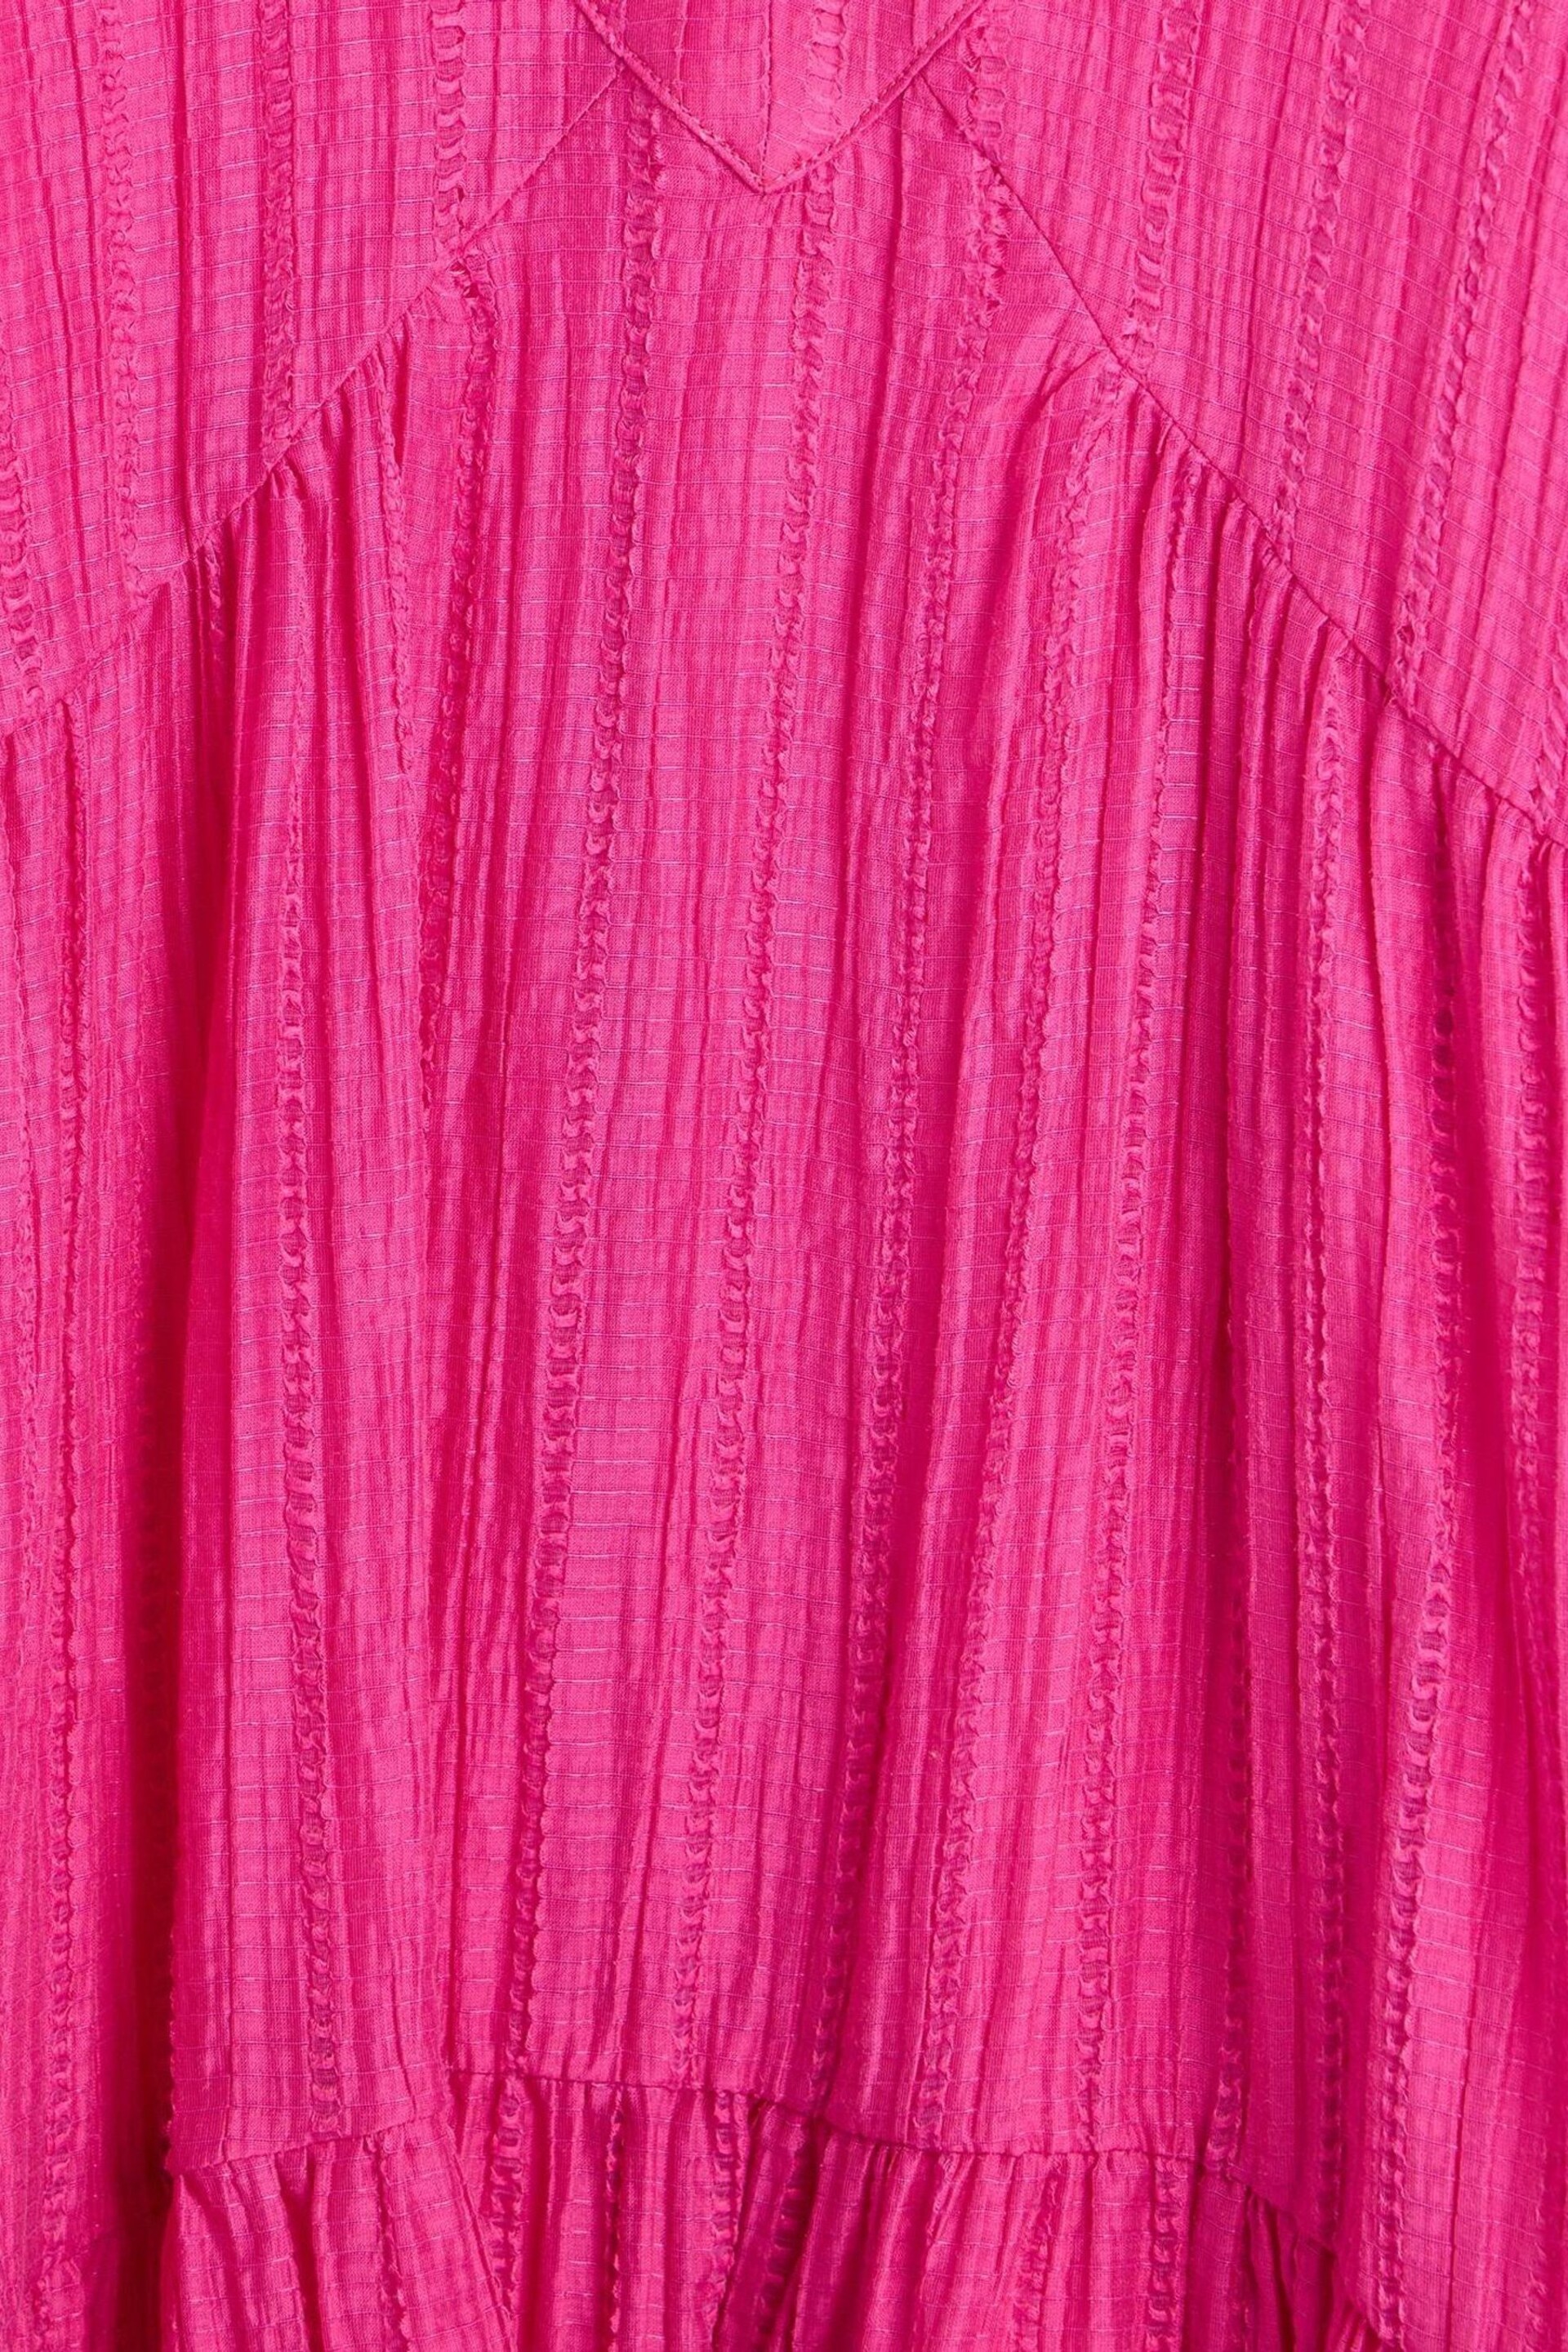 Oliver Bonas Pink Textured Tiered Mini Dress - Image 6 of 6